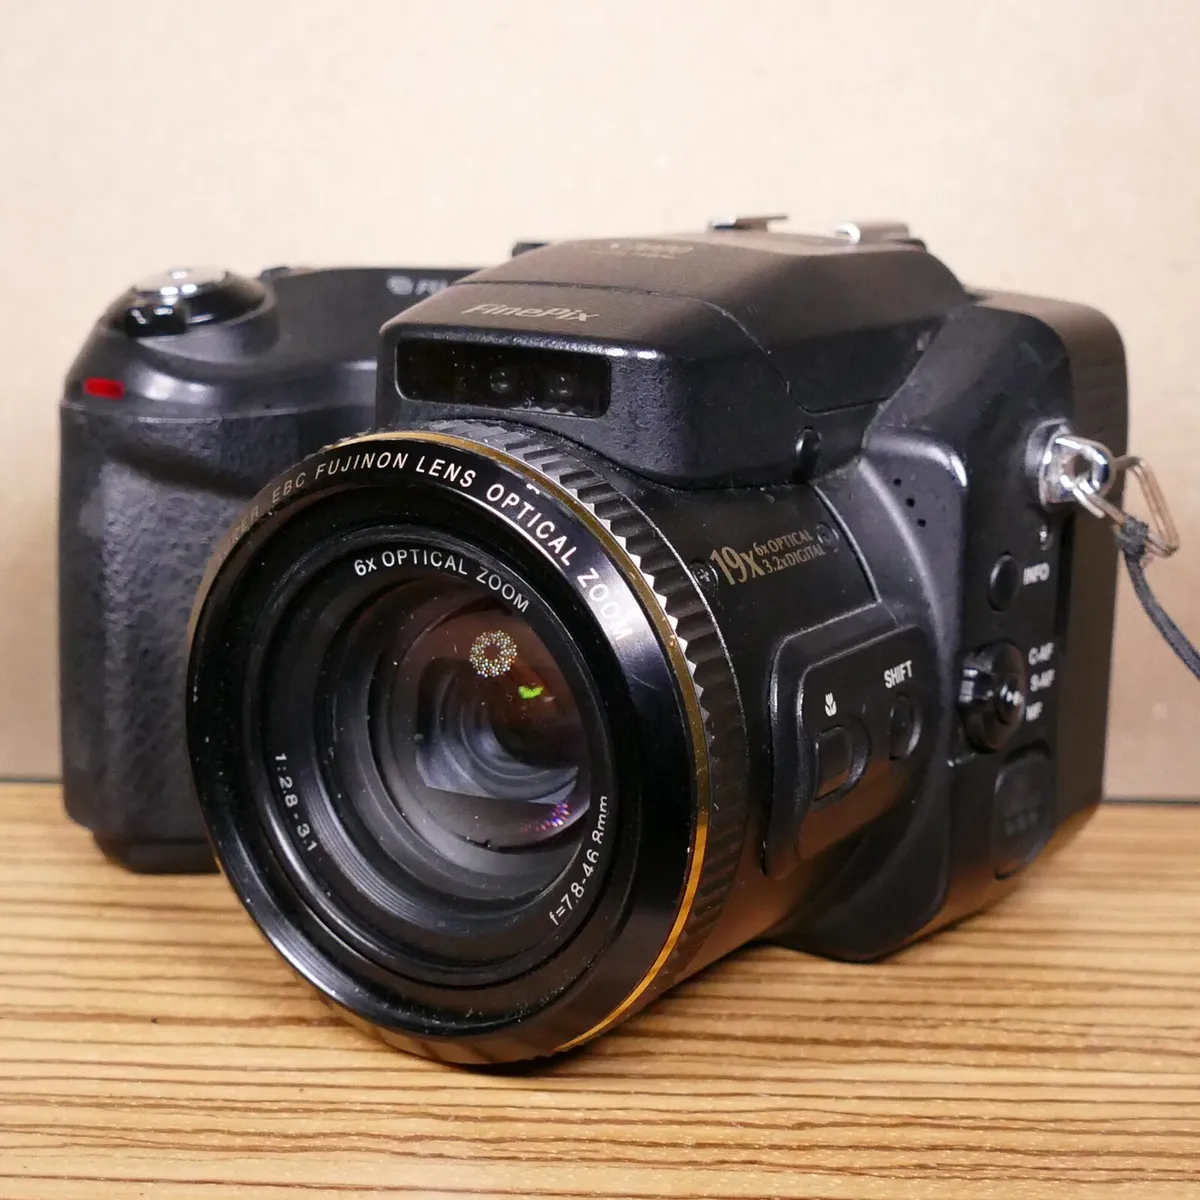 Fujifilm FinePix S7000 Digital Bridge Camera - See Description